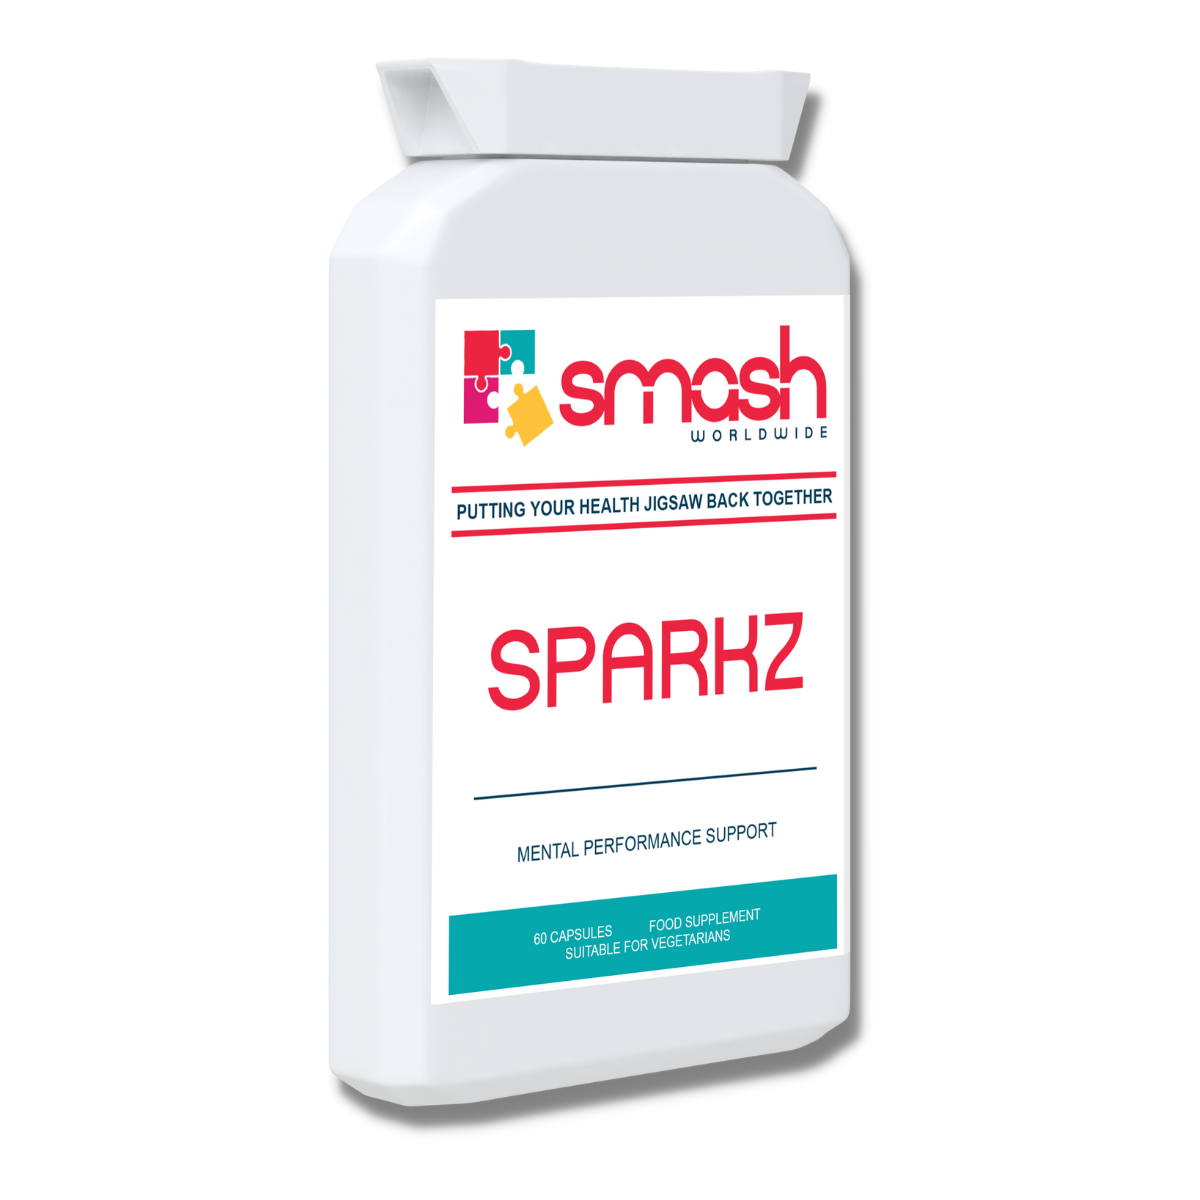 SMASH Worldwide Sparkz mental performance support